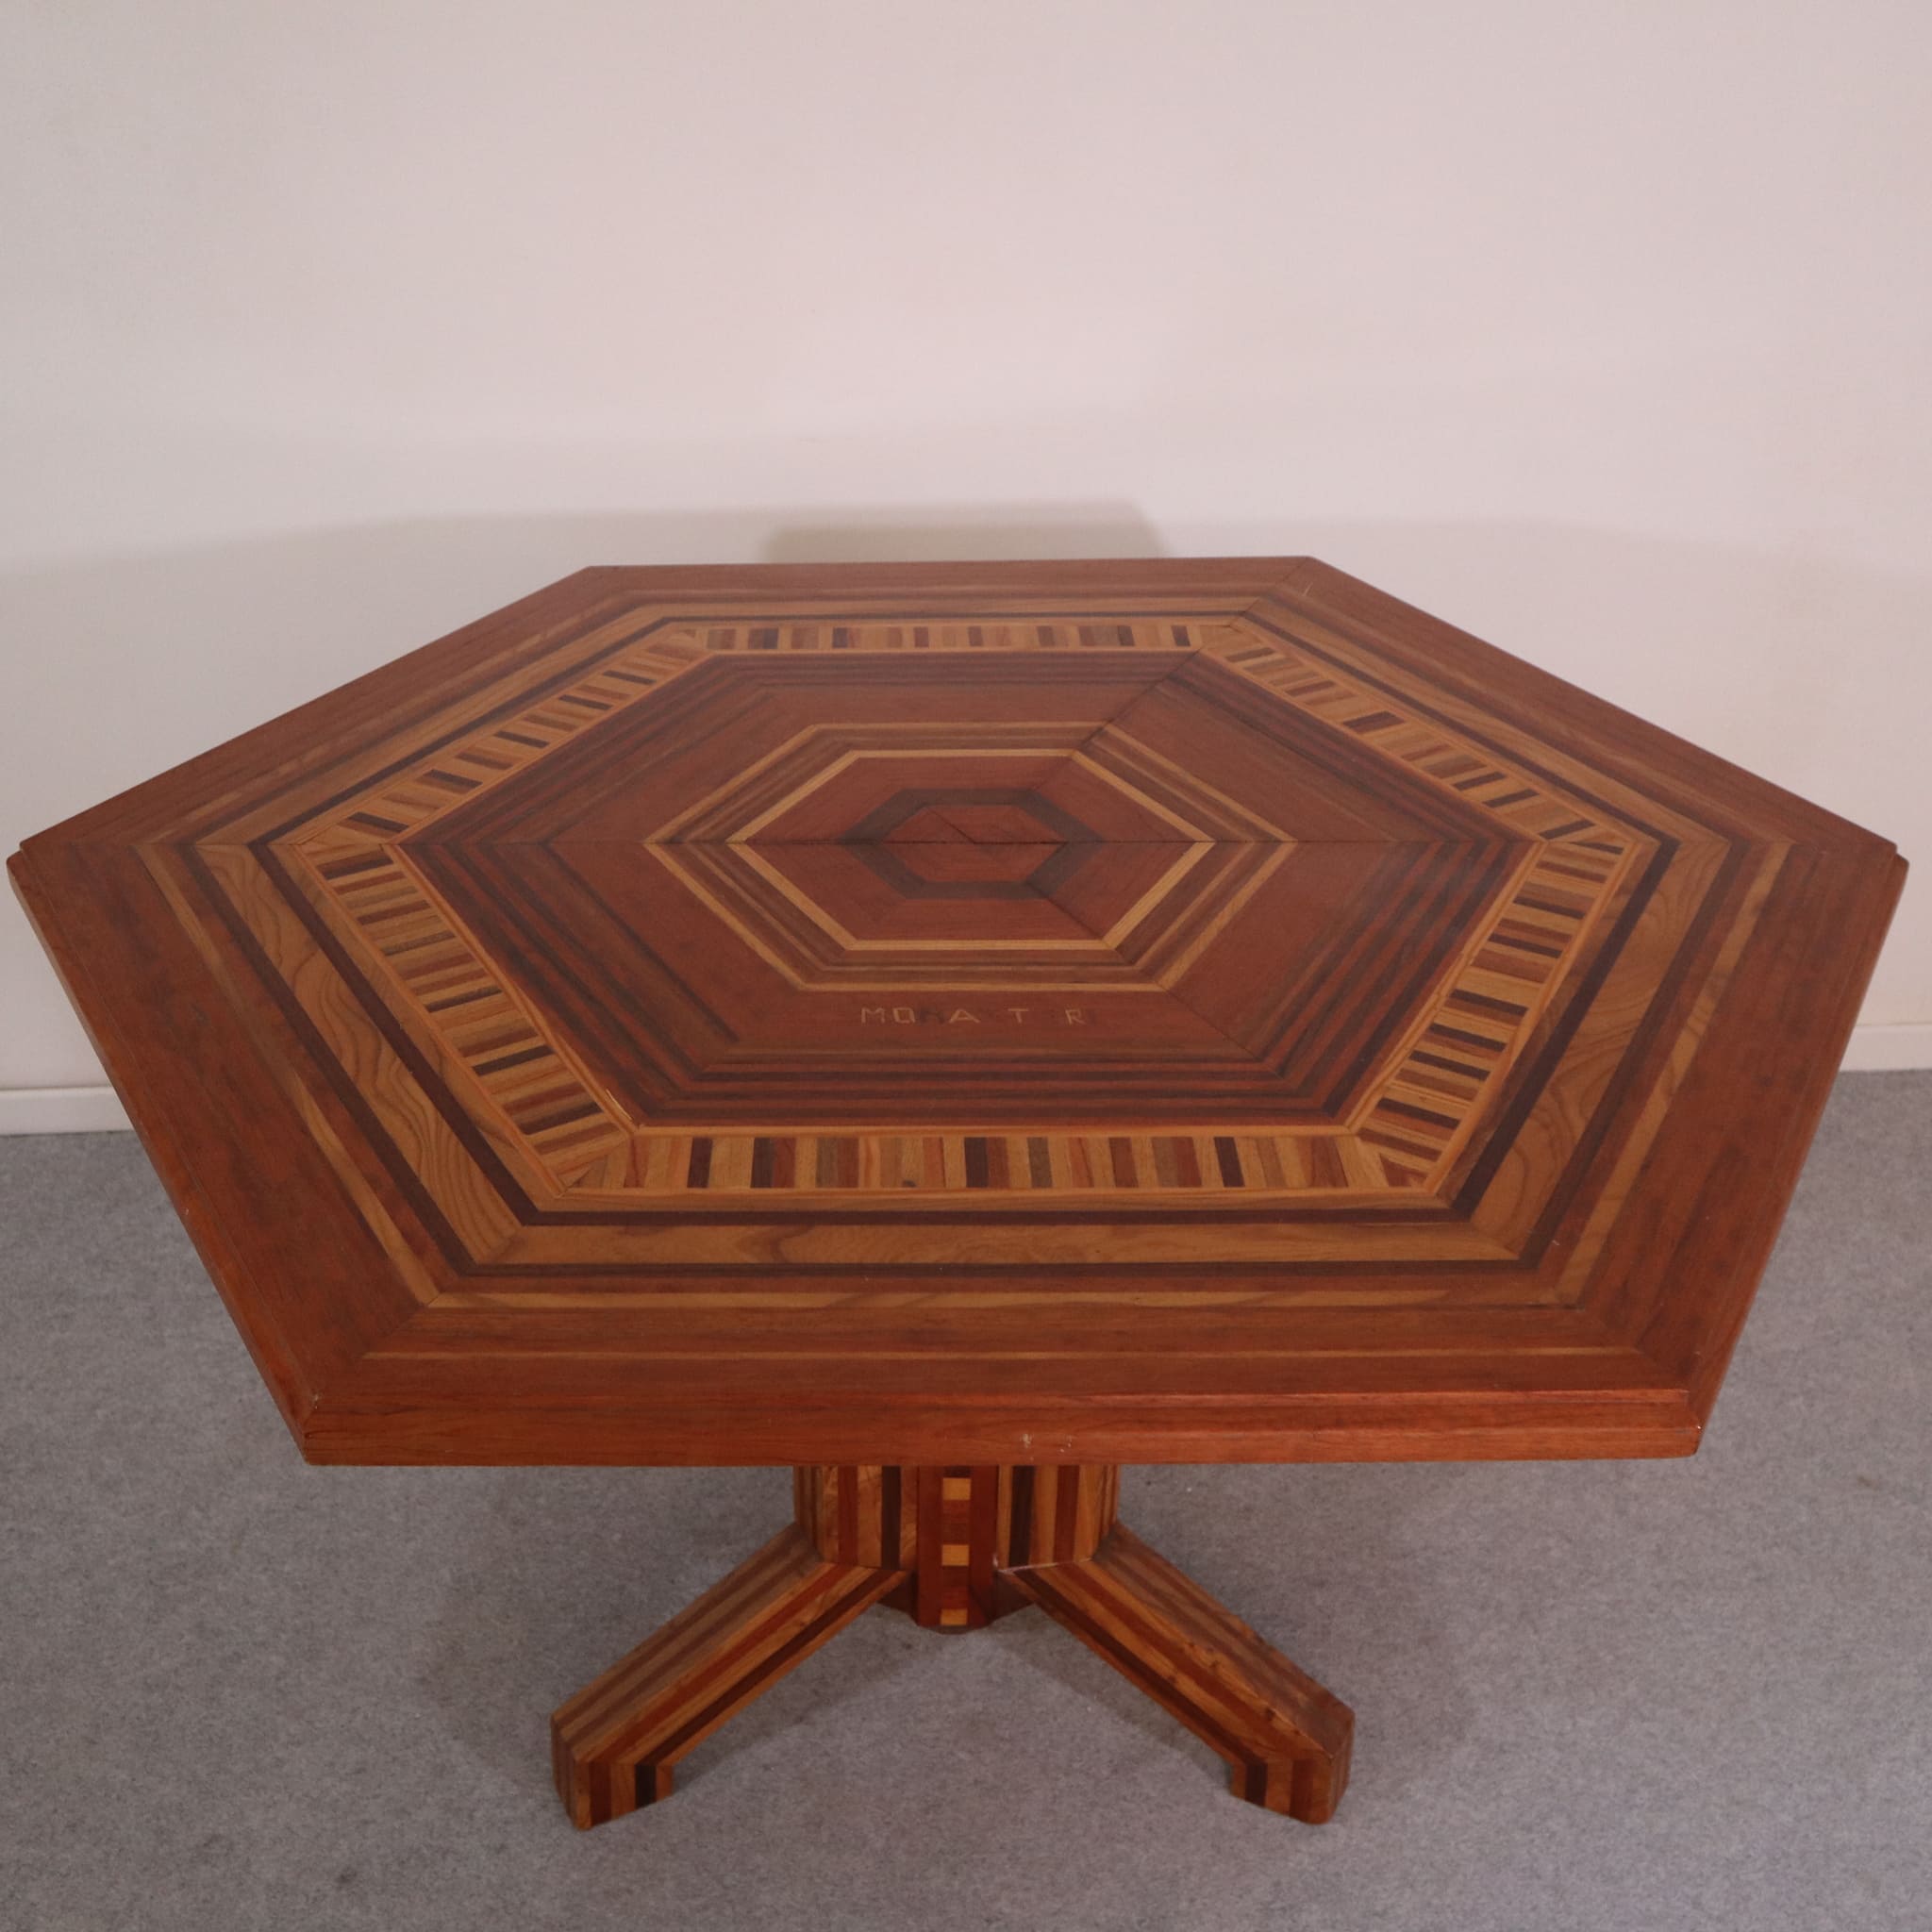 visionidepoca-visioni-depoca-table-wood-unique-monasteri-octagonal-70s-furniture-made-italy-modern-vintage-design-antiques-3